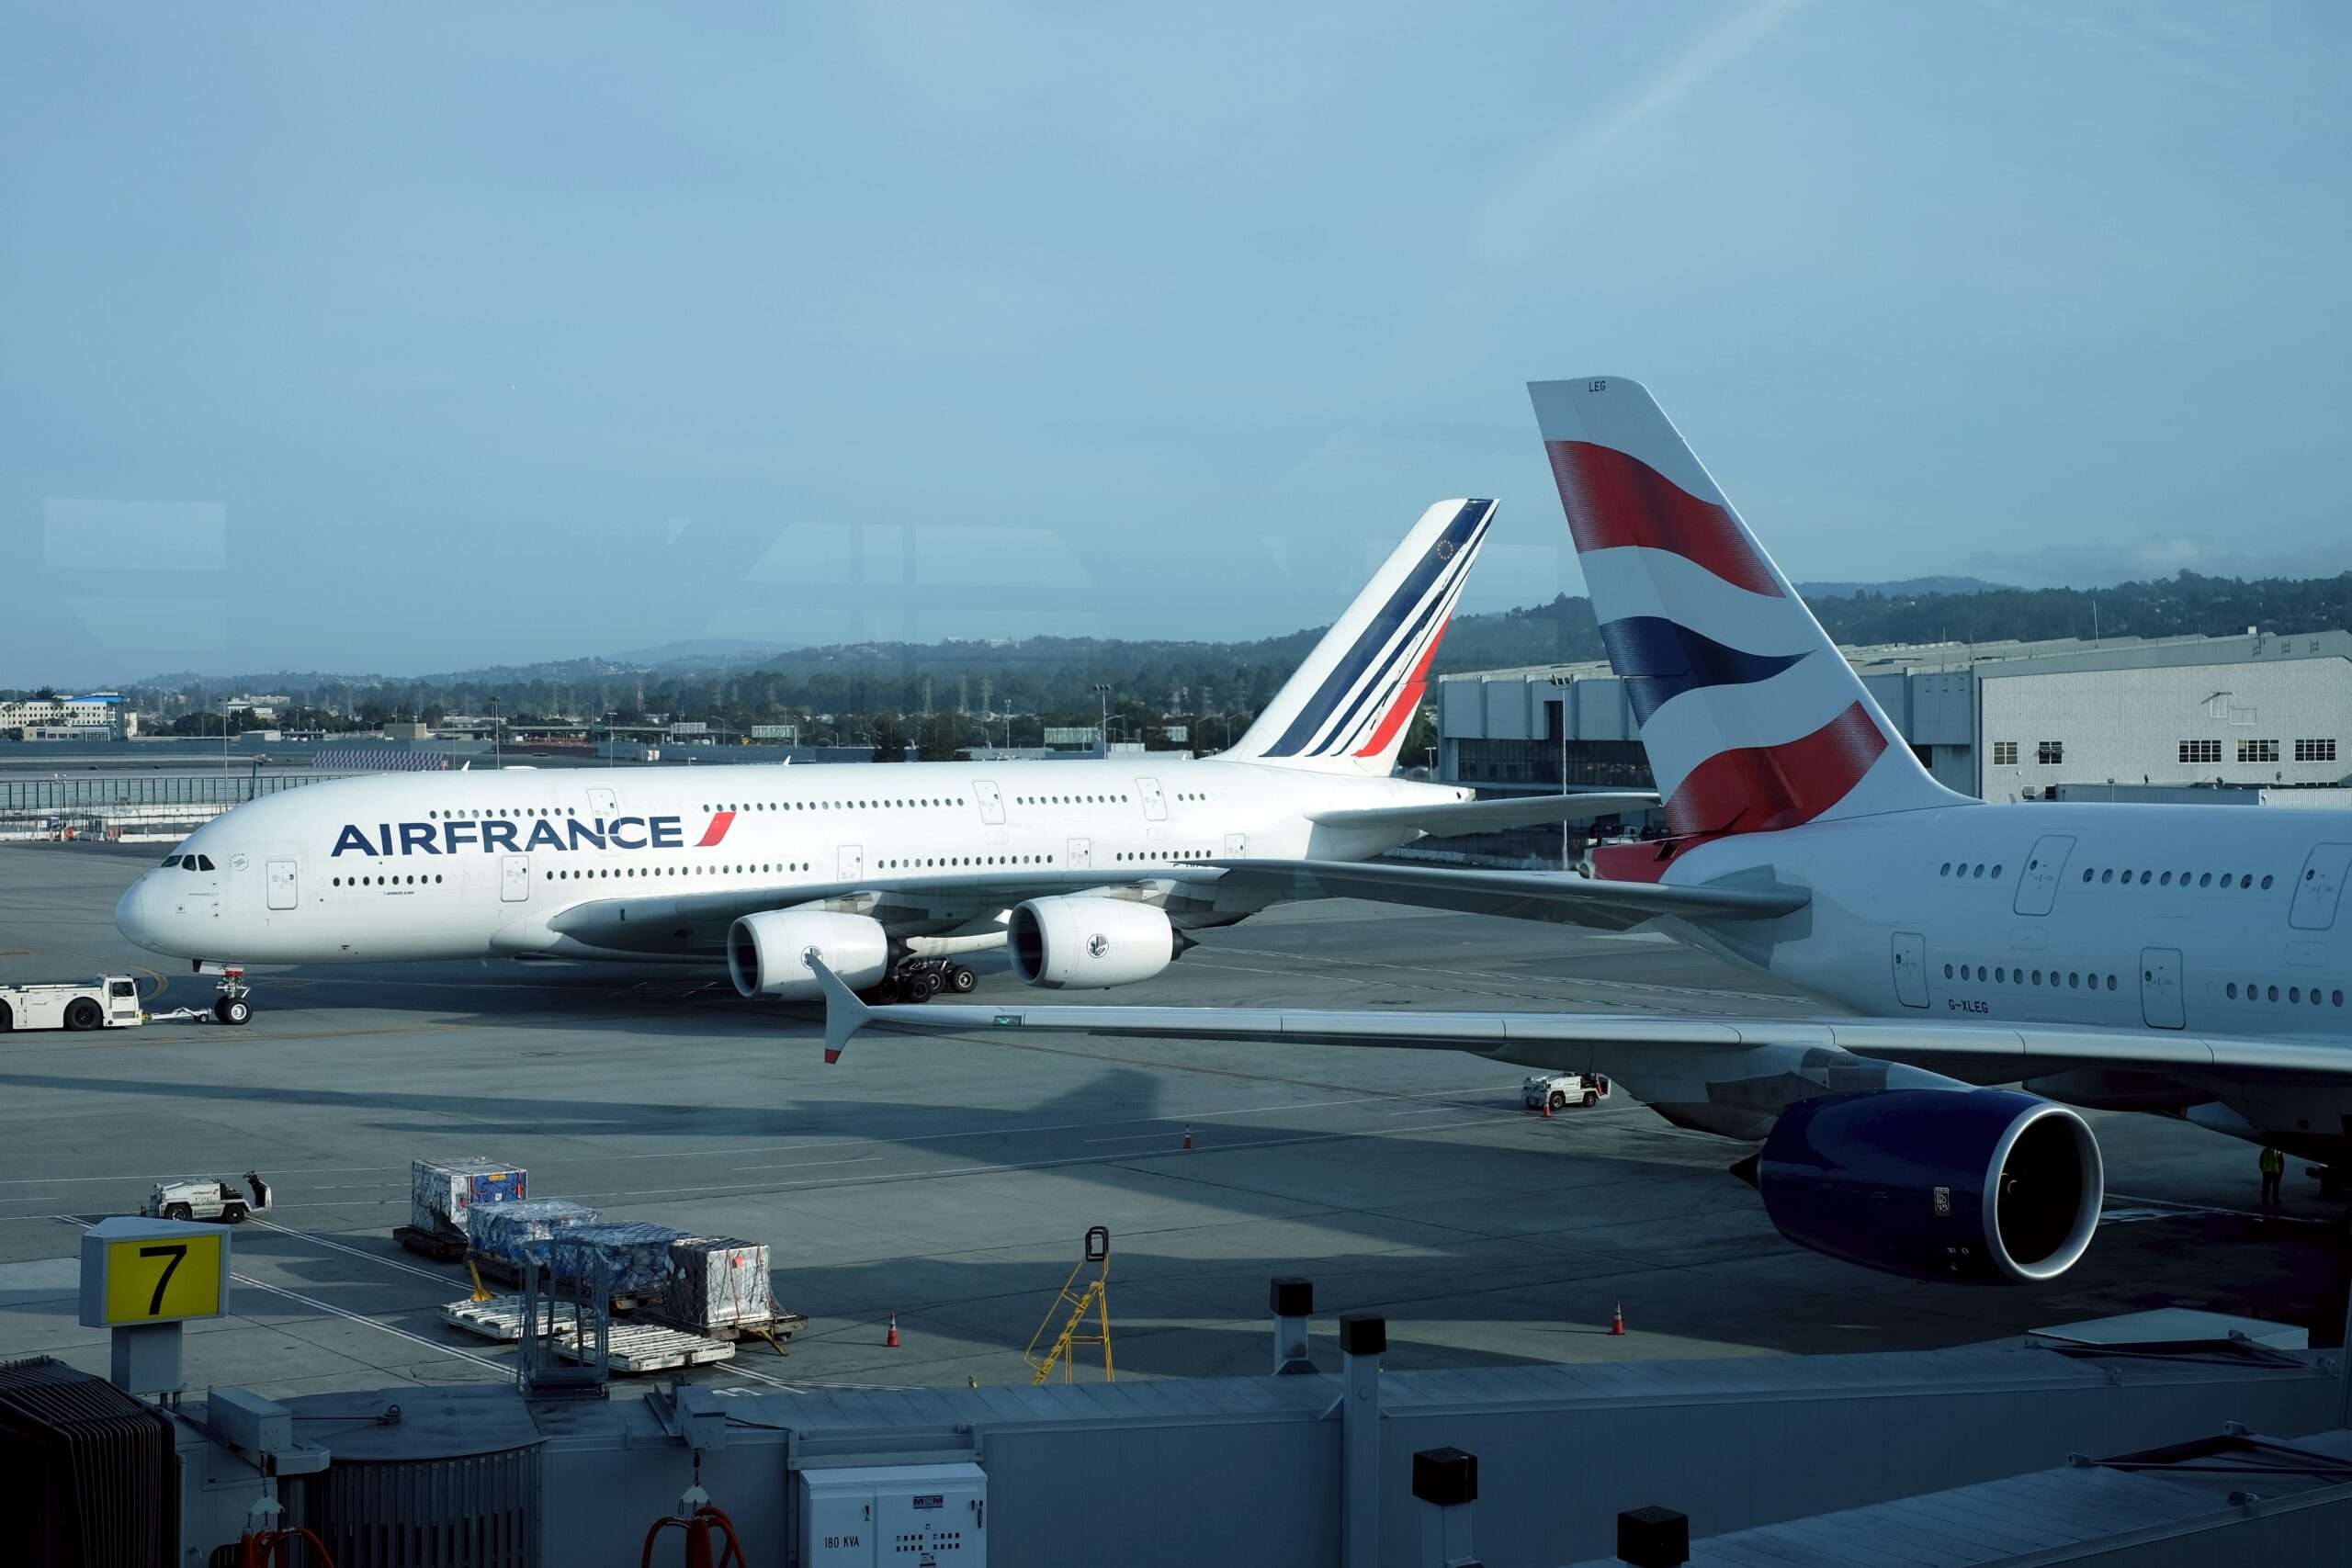 British Airways vs. Air France: Who's Busier?